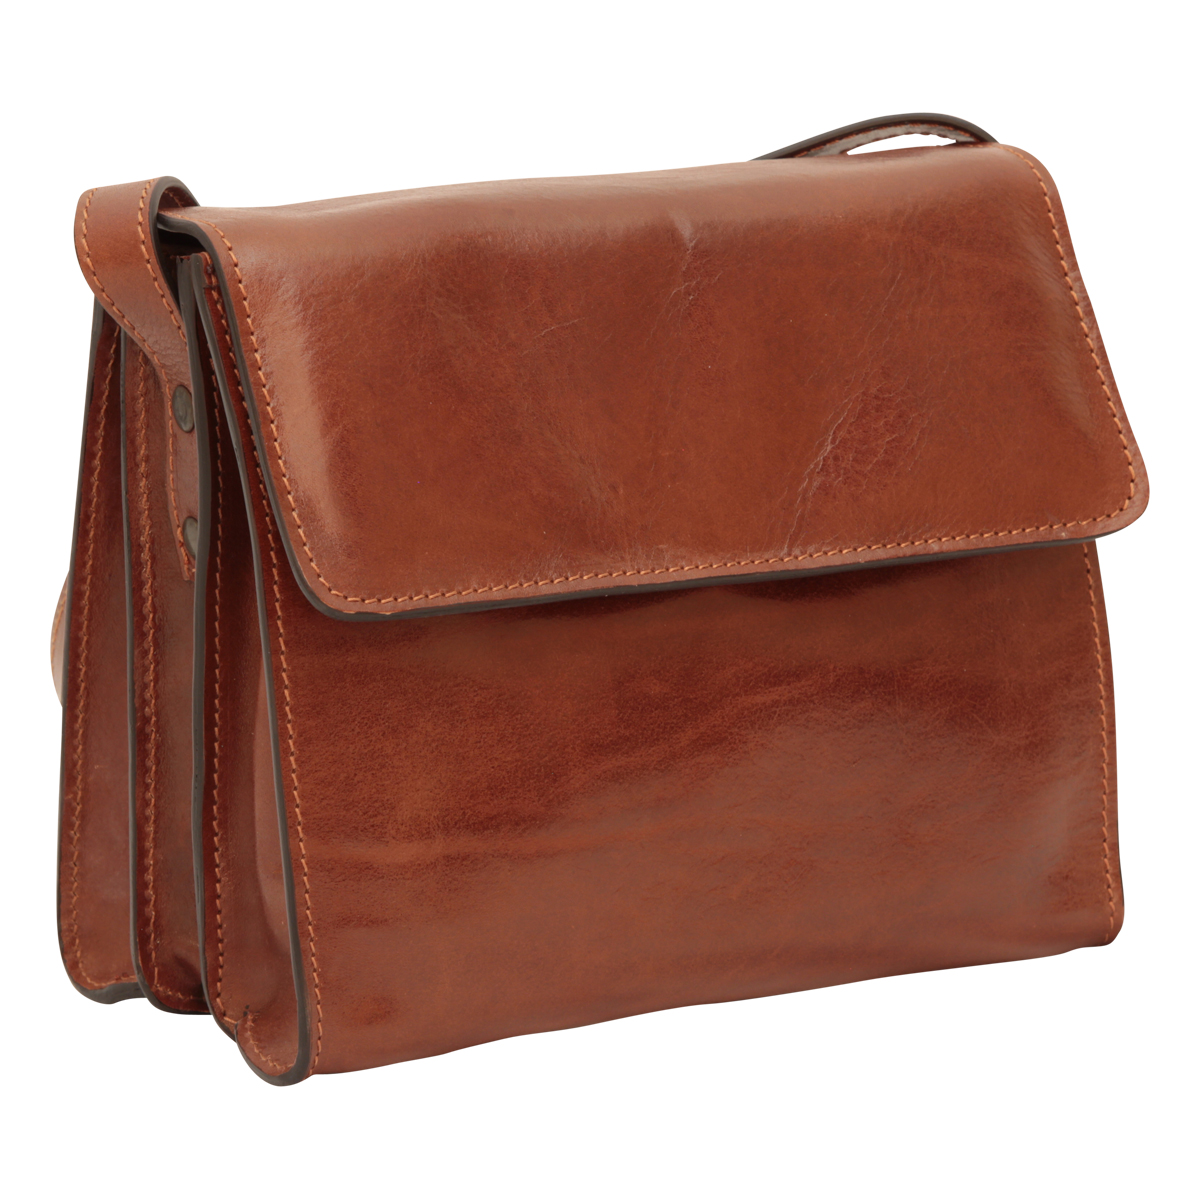 Full grain calfskin shoulder bag  | 209305MA | EURO | Old Angler Firenze